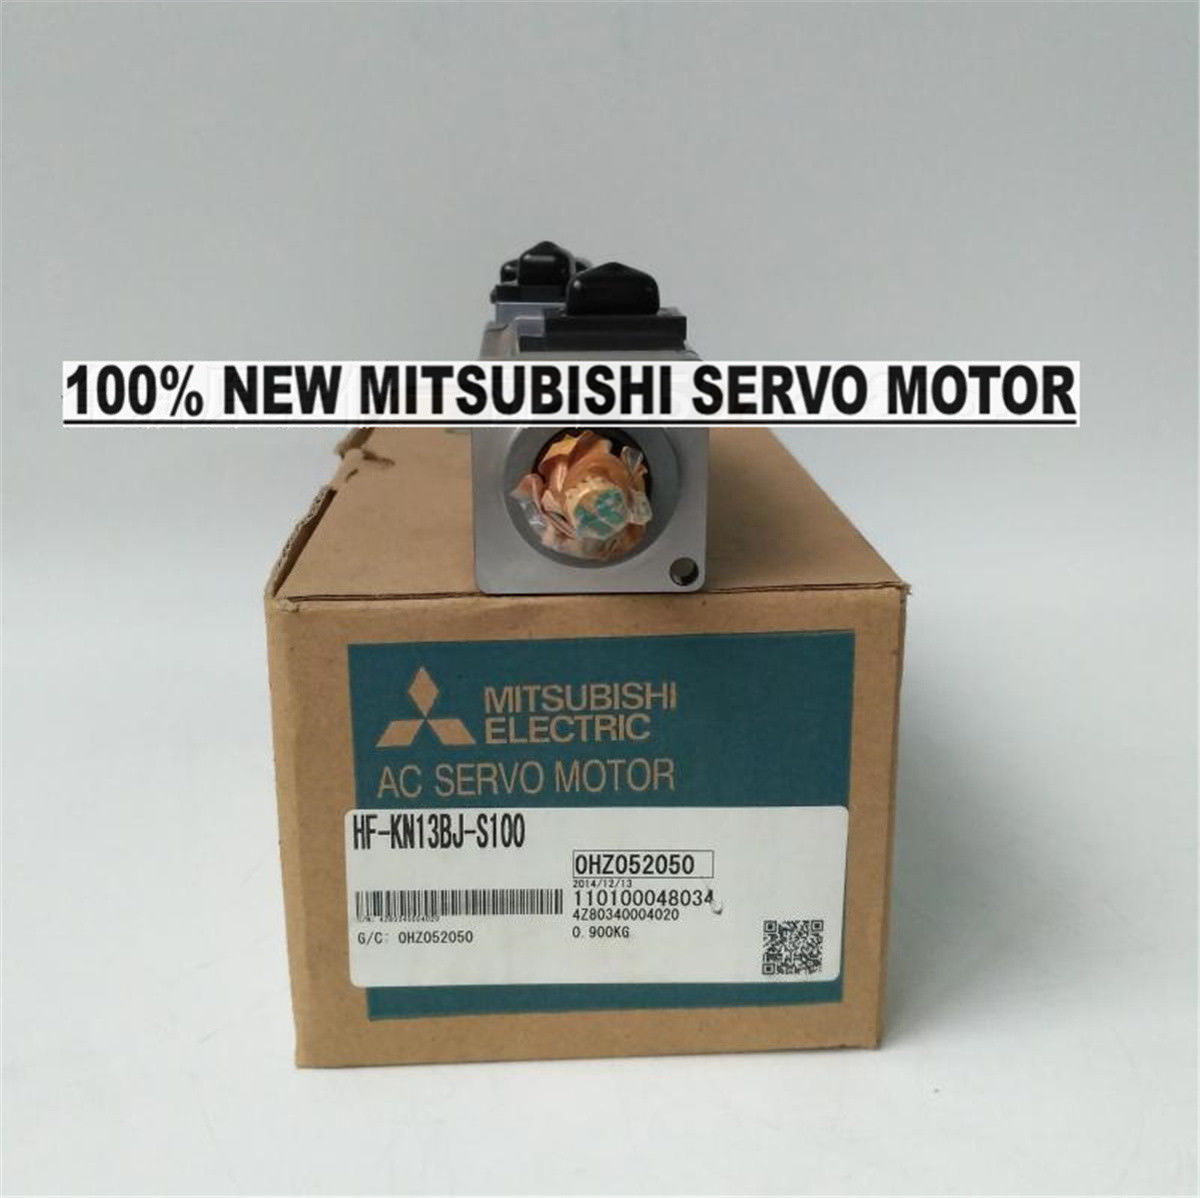 NEW Mitsubishi Servo Motor HF-KN13BJ-S100 in box HFKN13BJS100